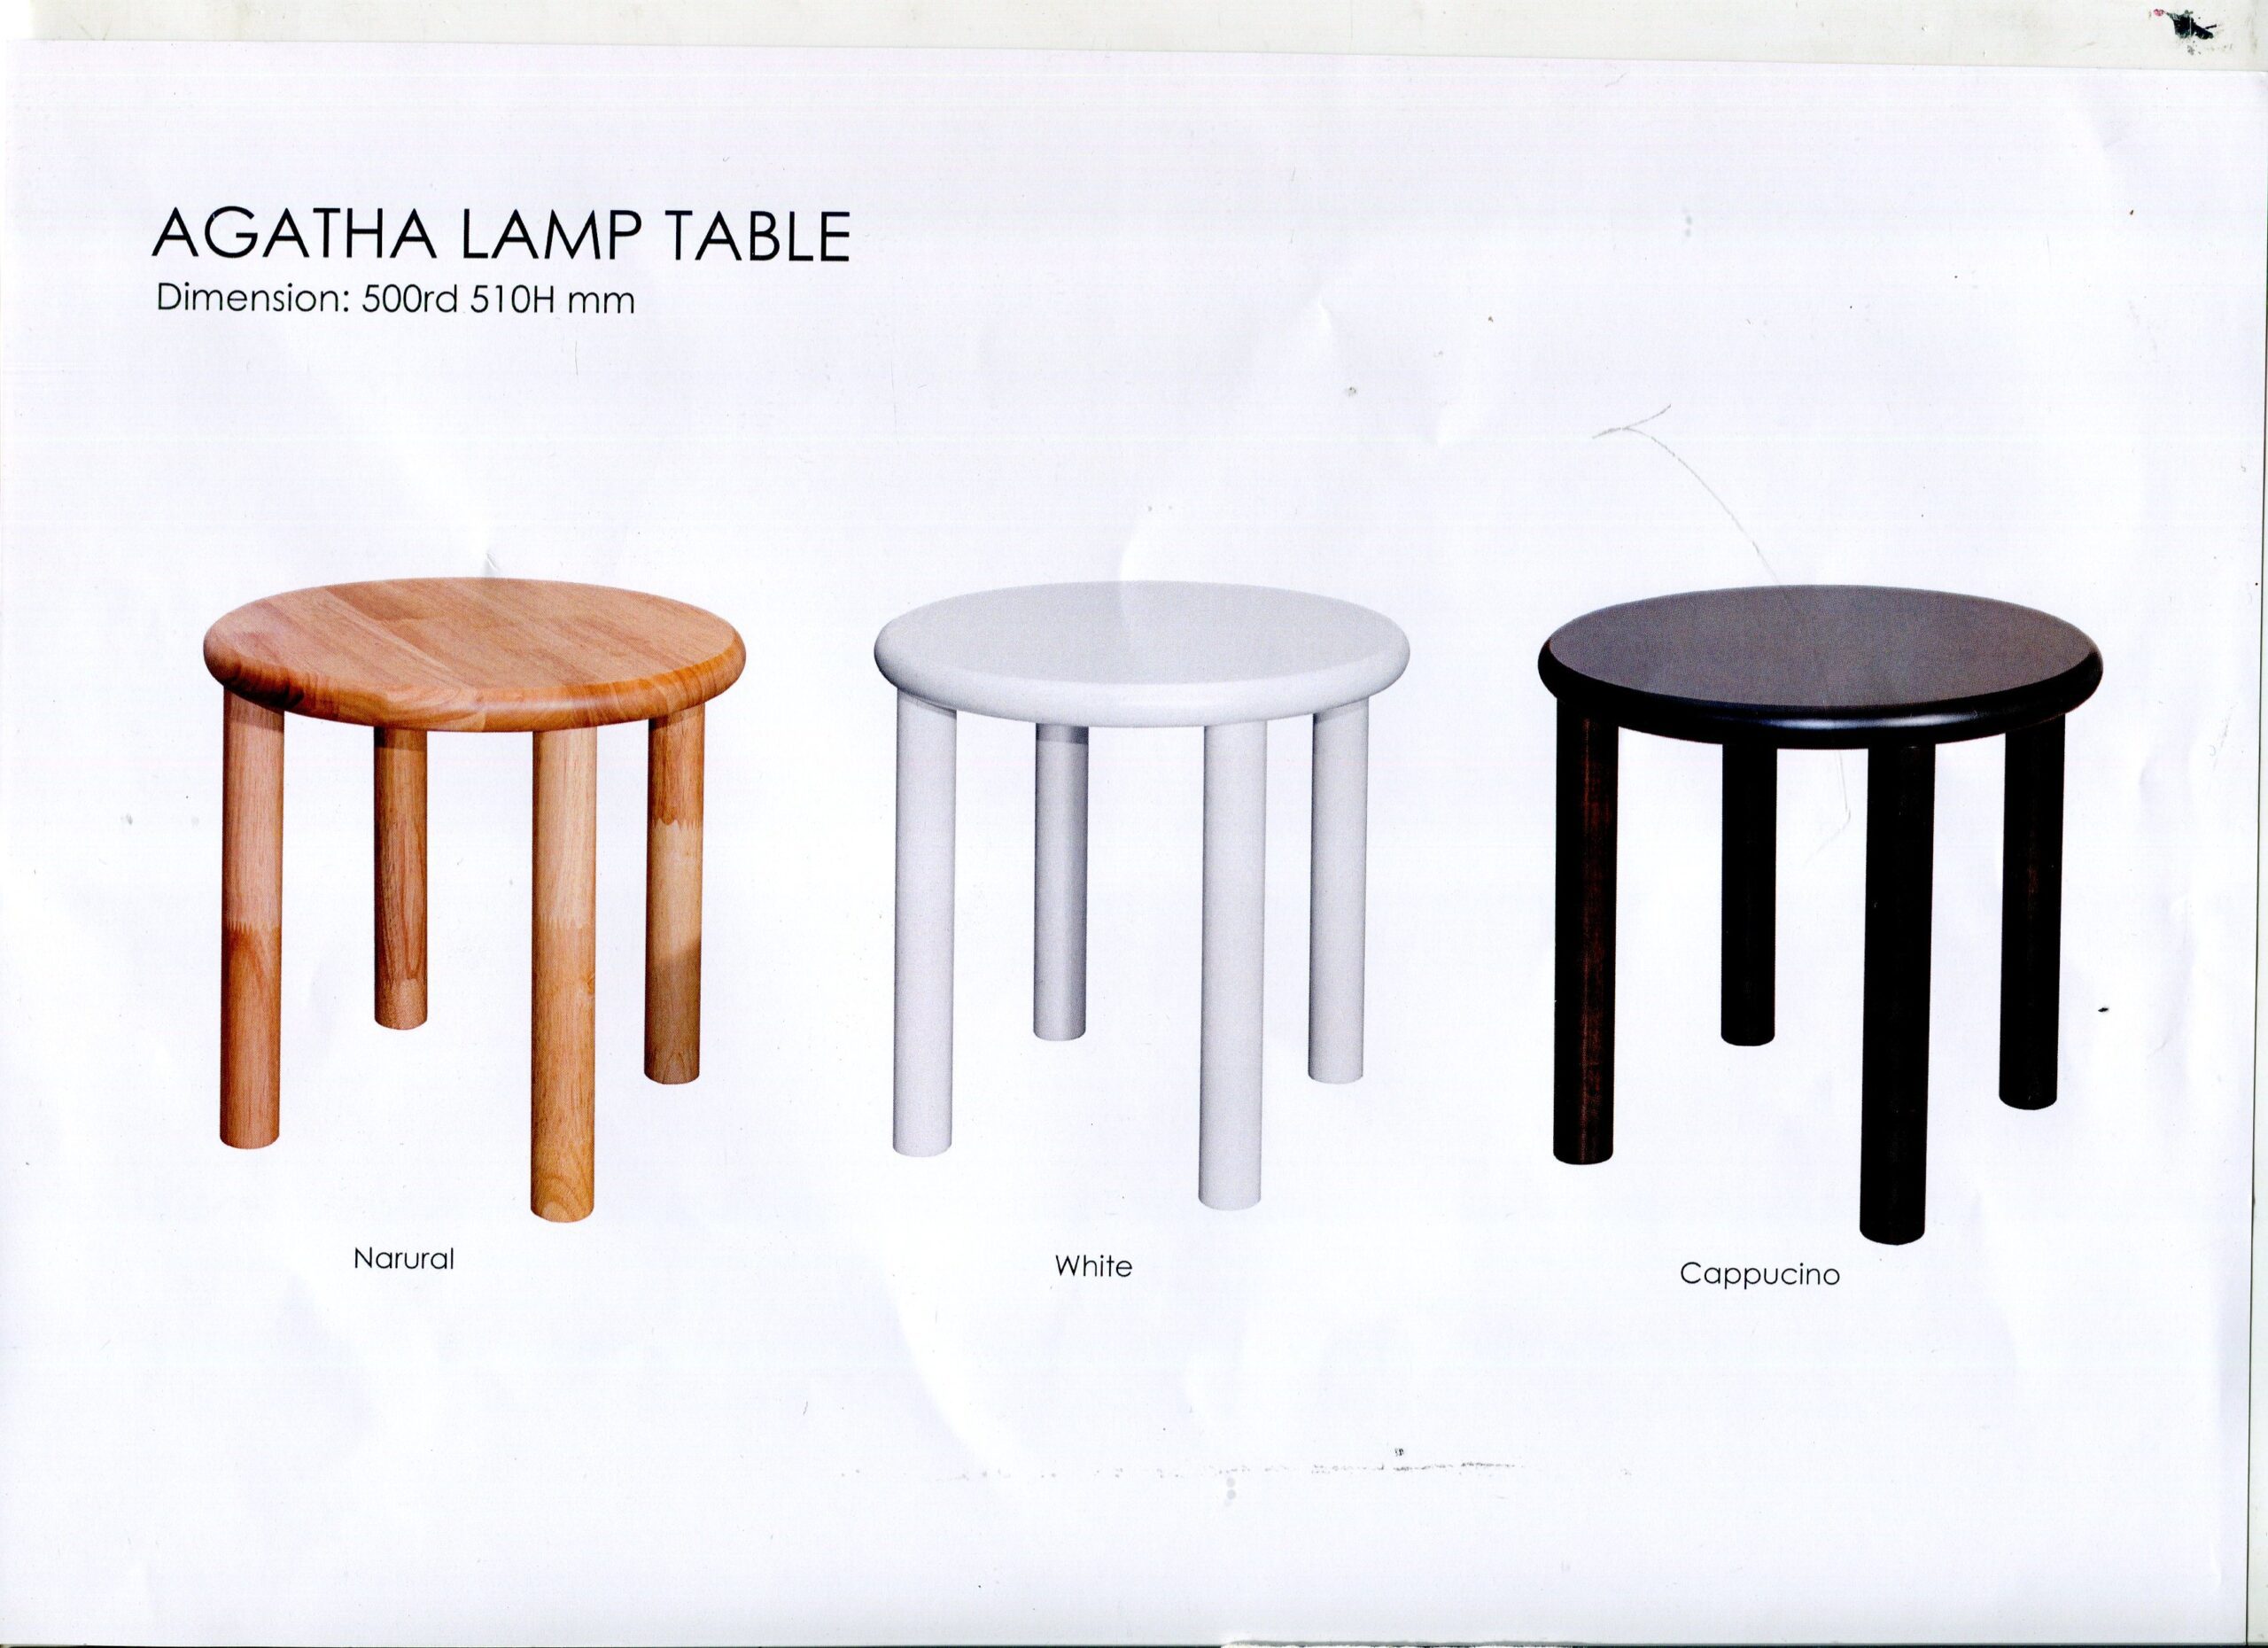 Product: AGATHA LAMP TABLE